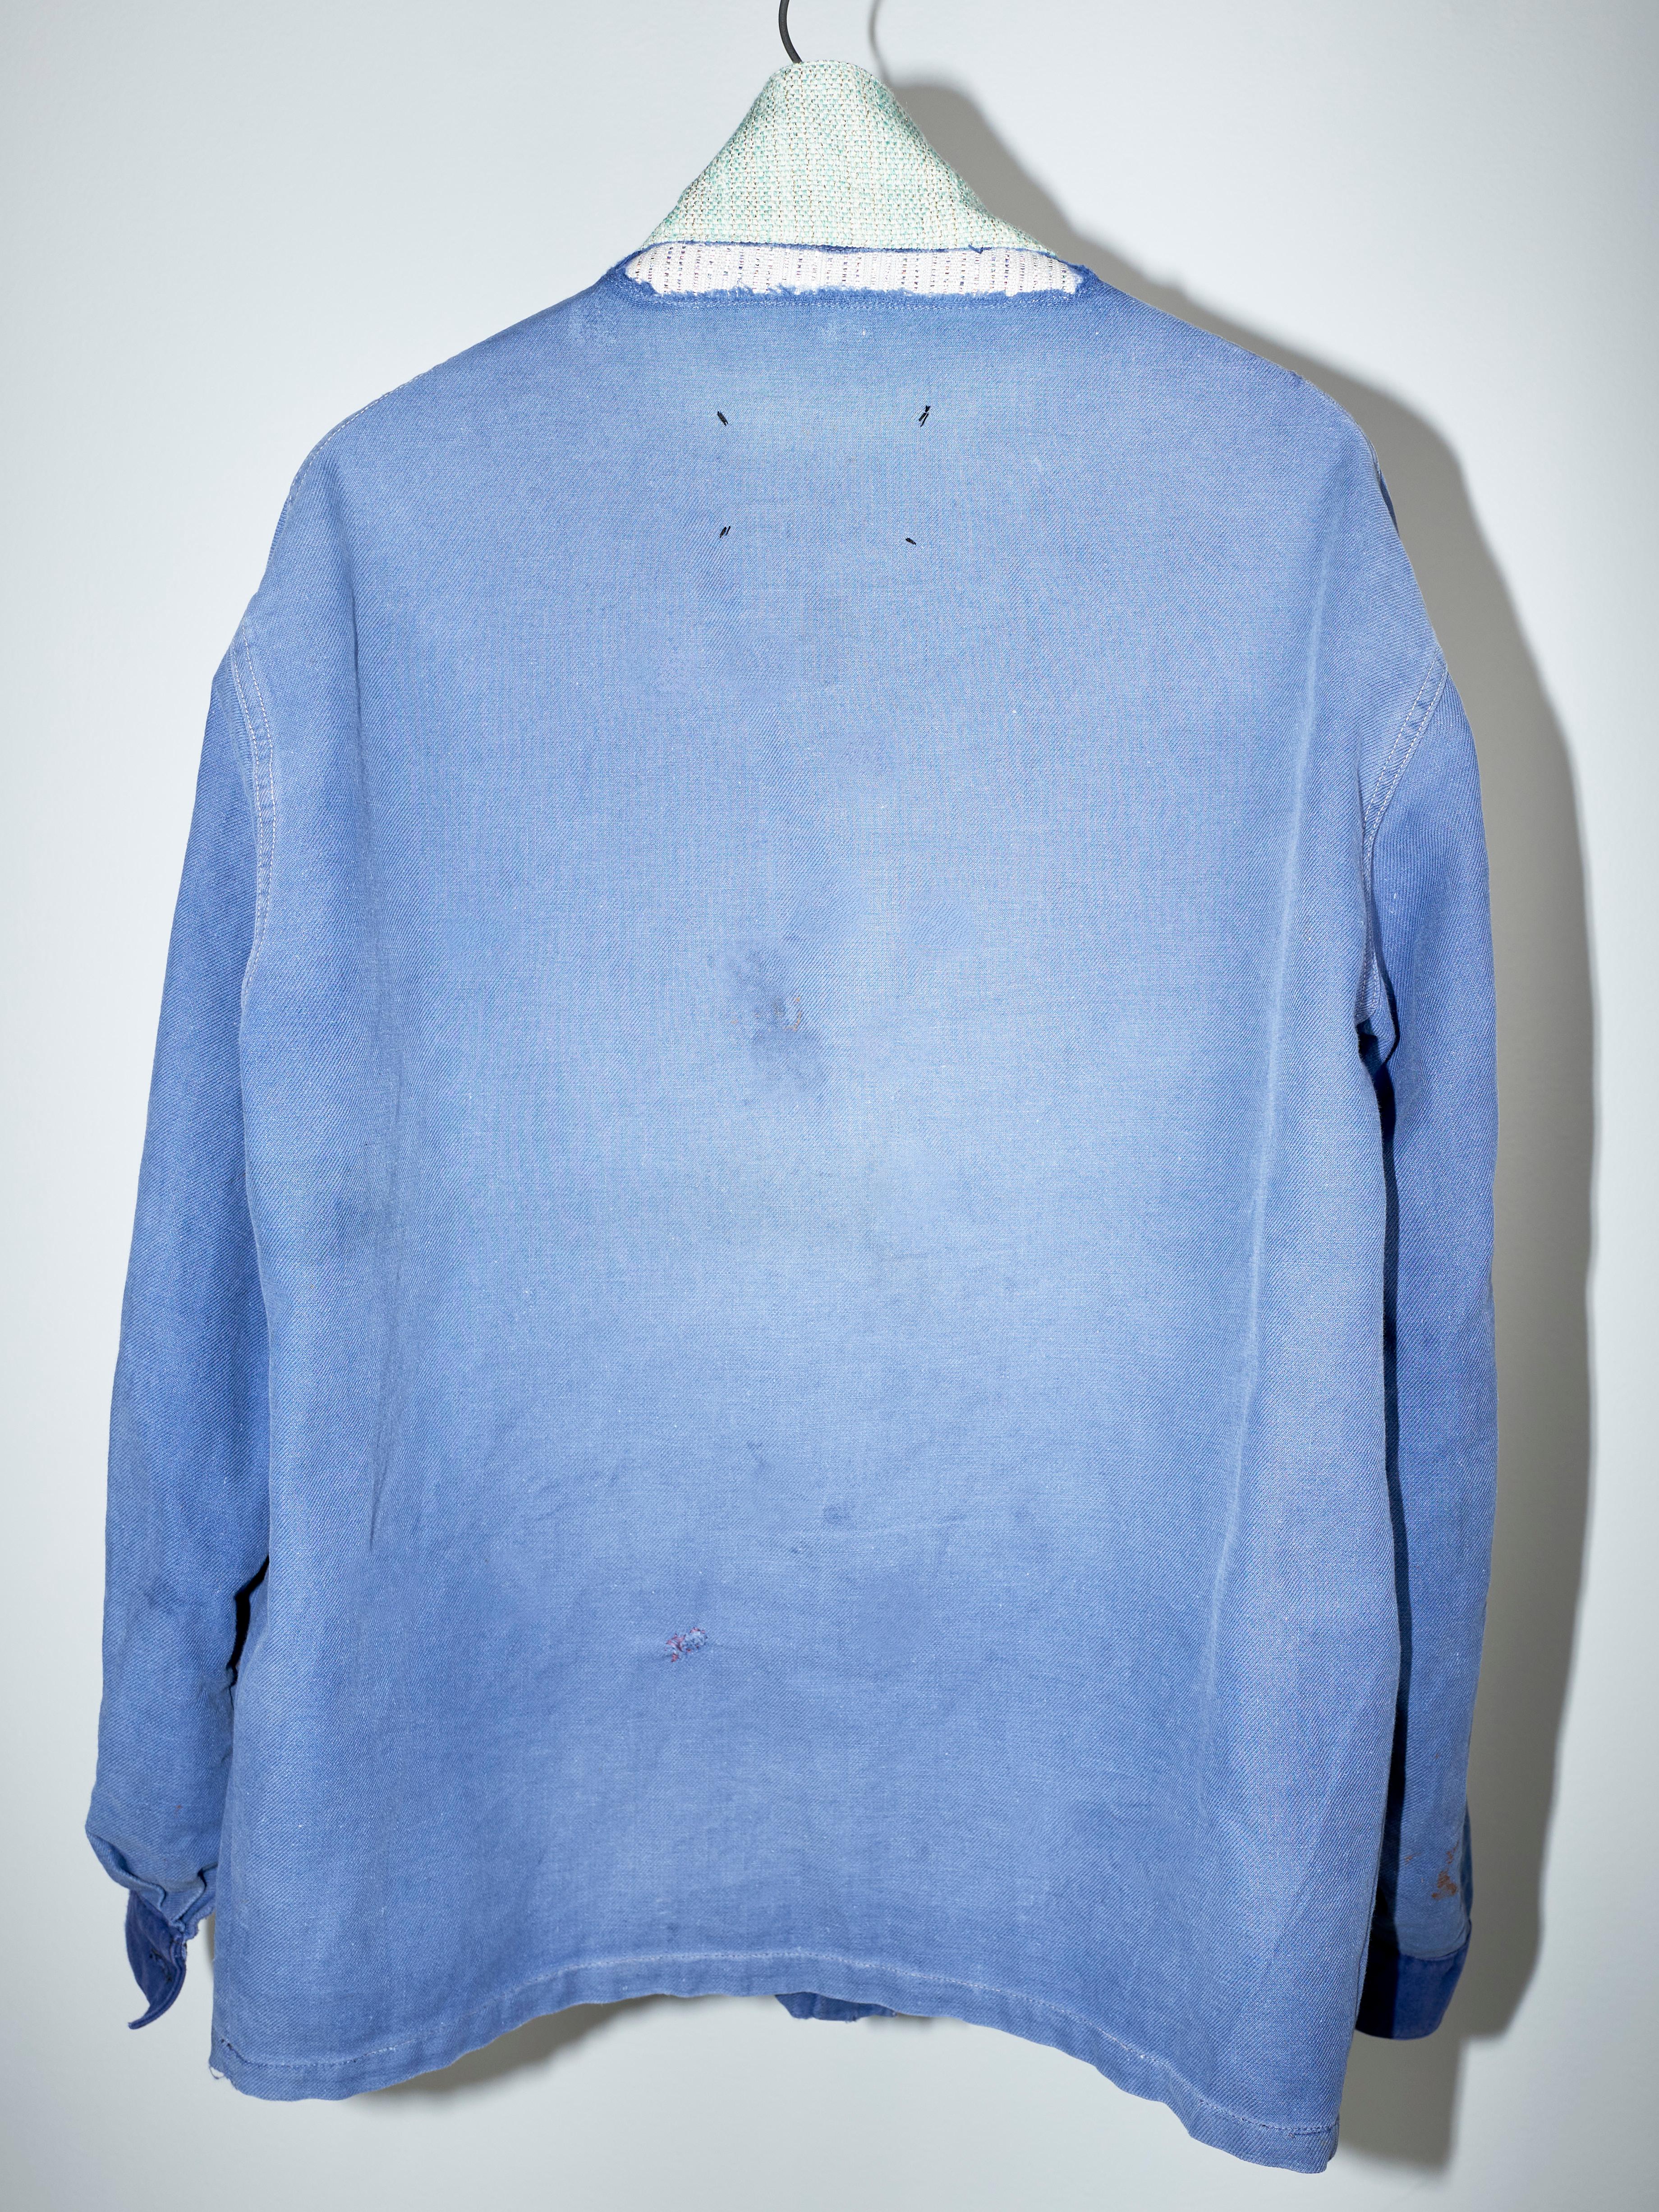 Tweed Pocket Light Blue Jacket Cotton French Work Wear Distressed Lurex Tweed 7